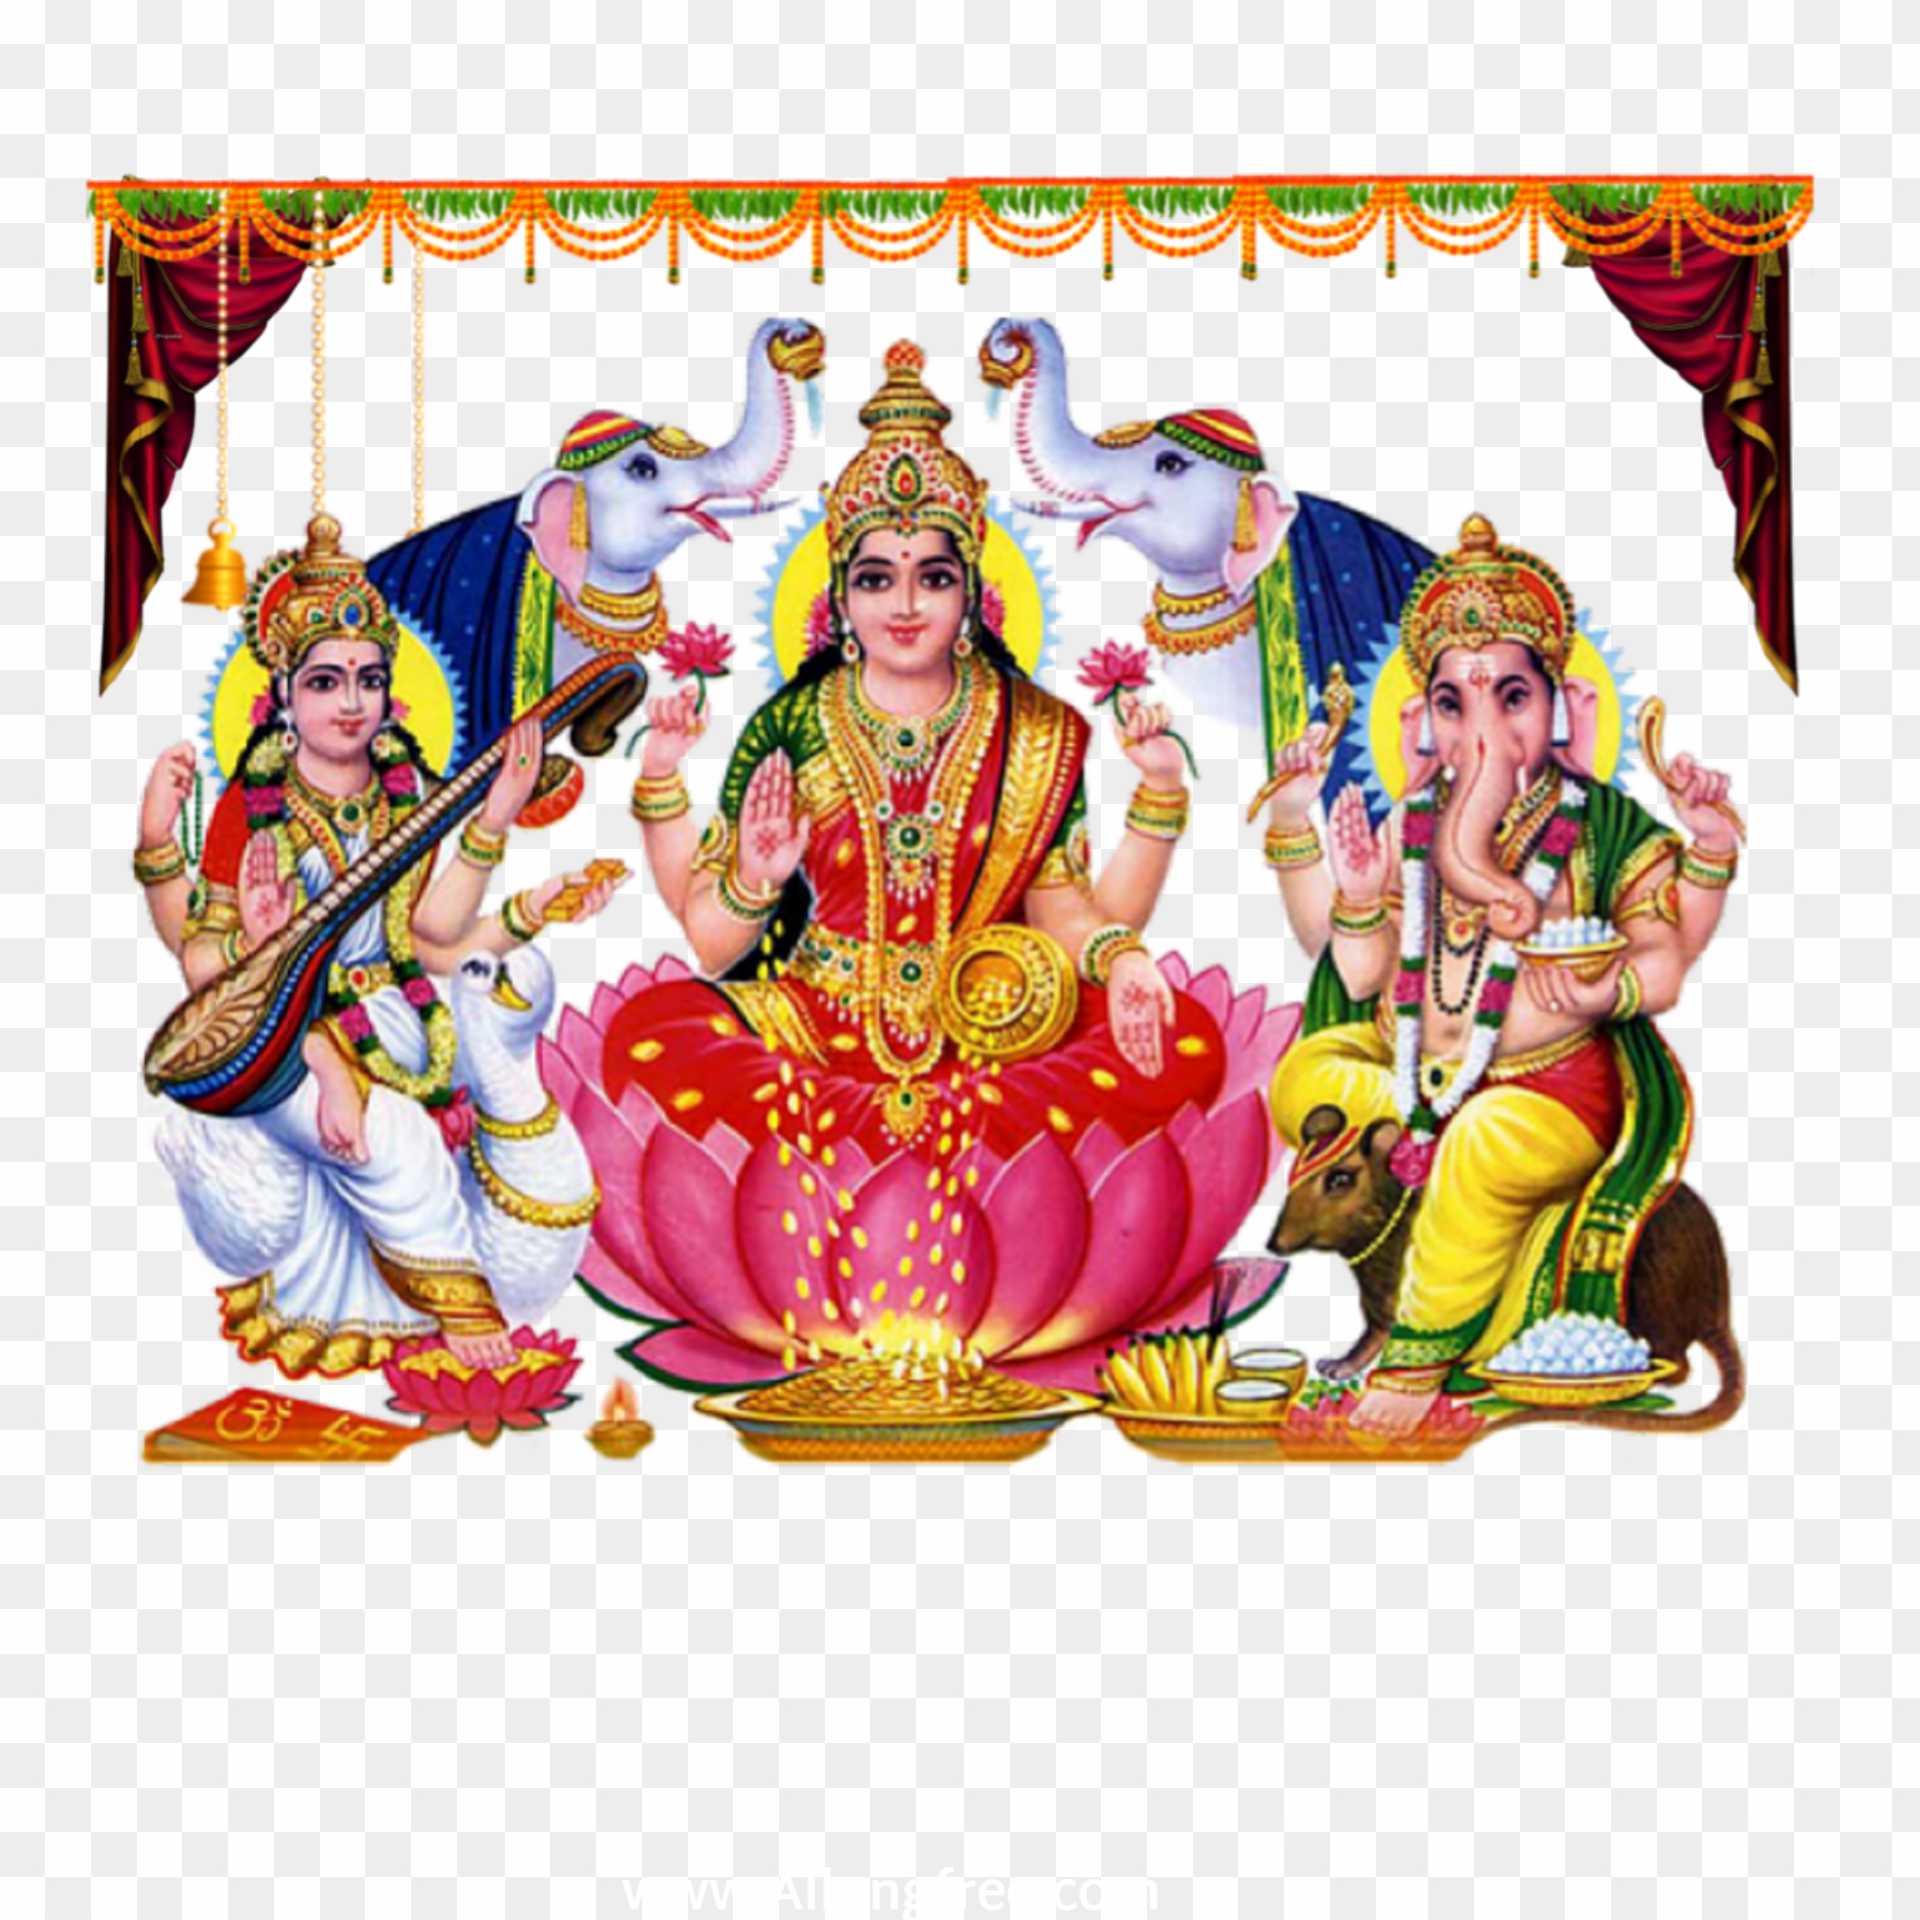 Ganesh Lakshmi Saraswati God PNG transferment images